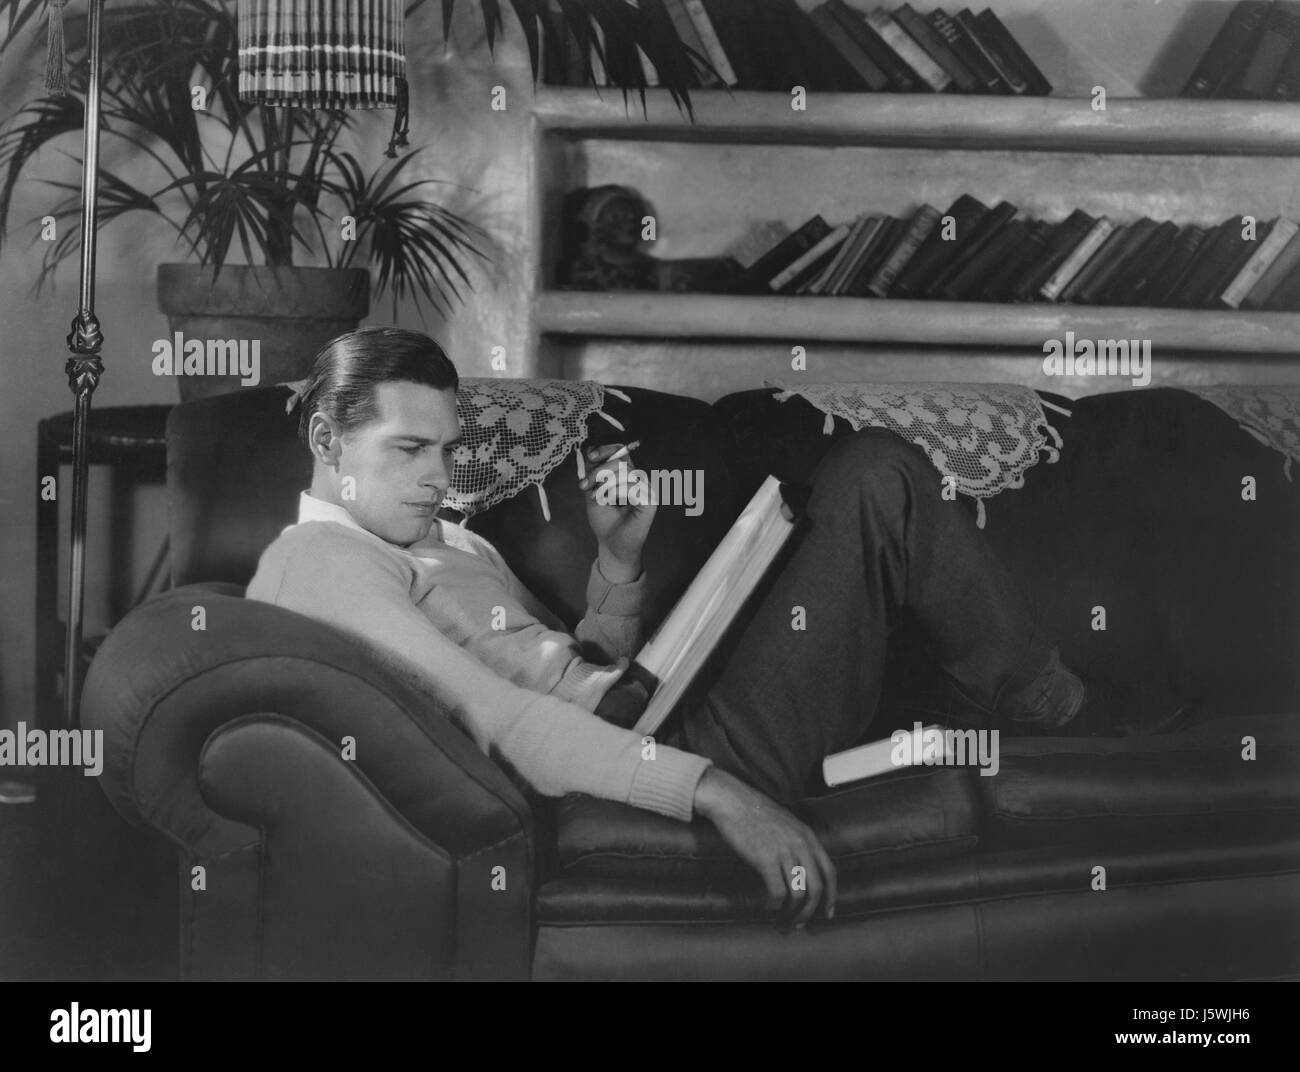 Actor Richard Arlen, Publicity Portrait Smoking Cigarette and Reading Script on Sofa, 1930's Stock Photo